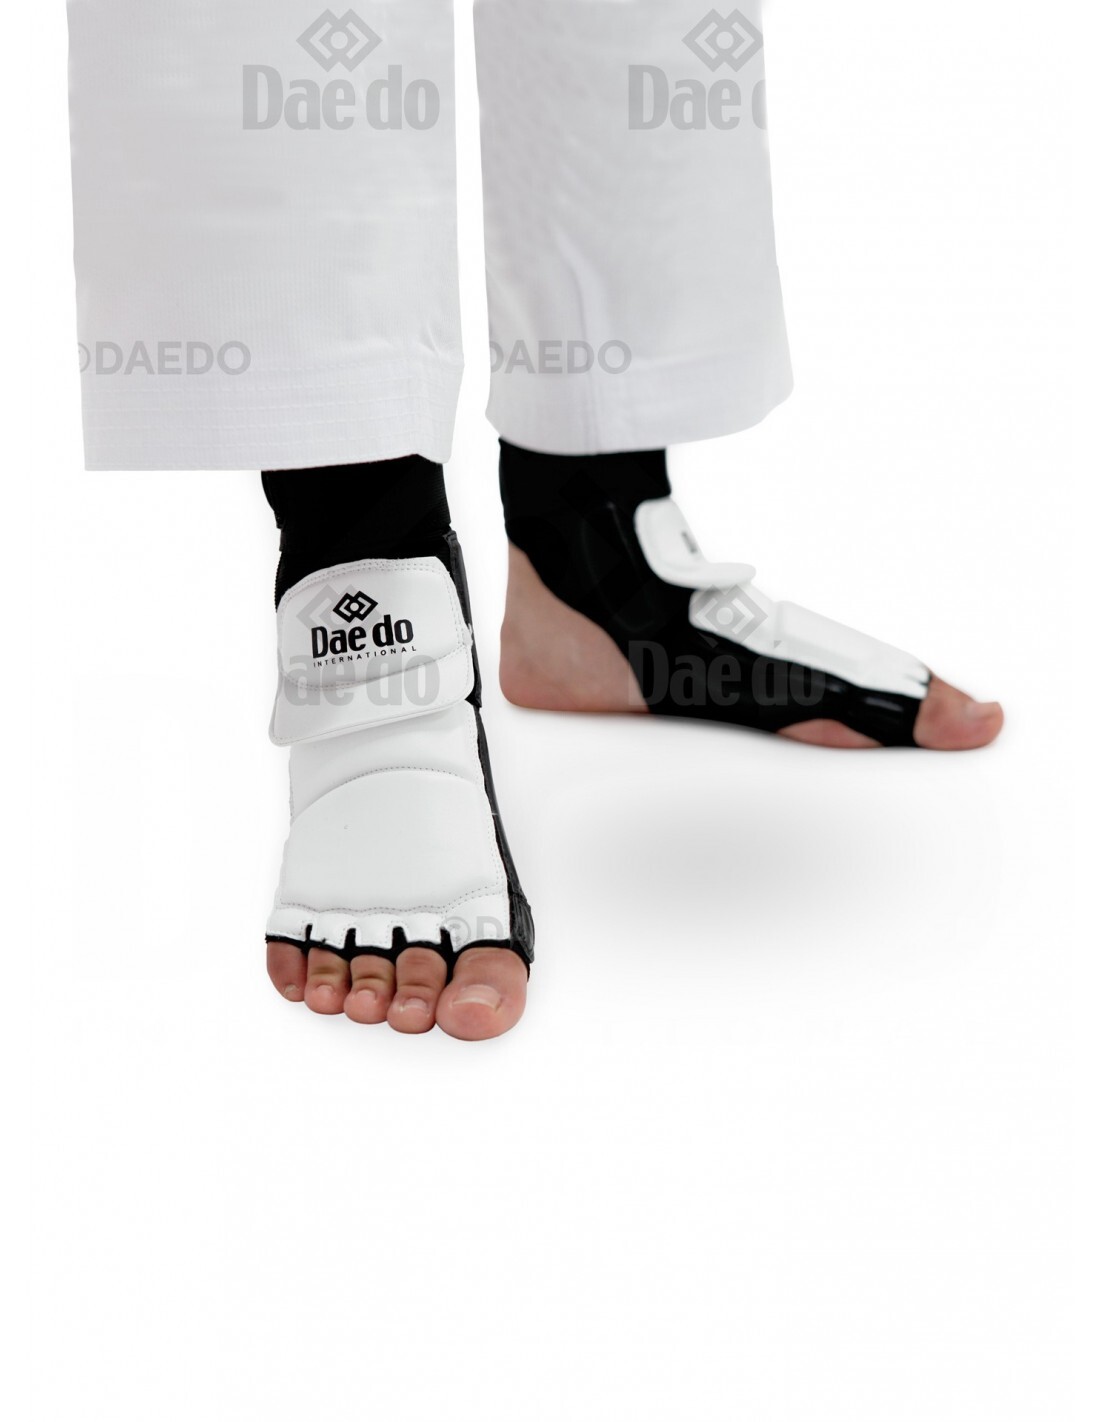 DAEDO - Foot Protector - Extra Small